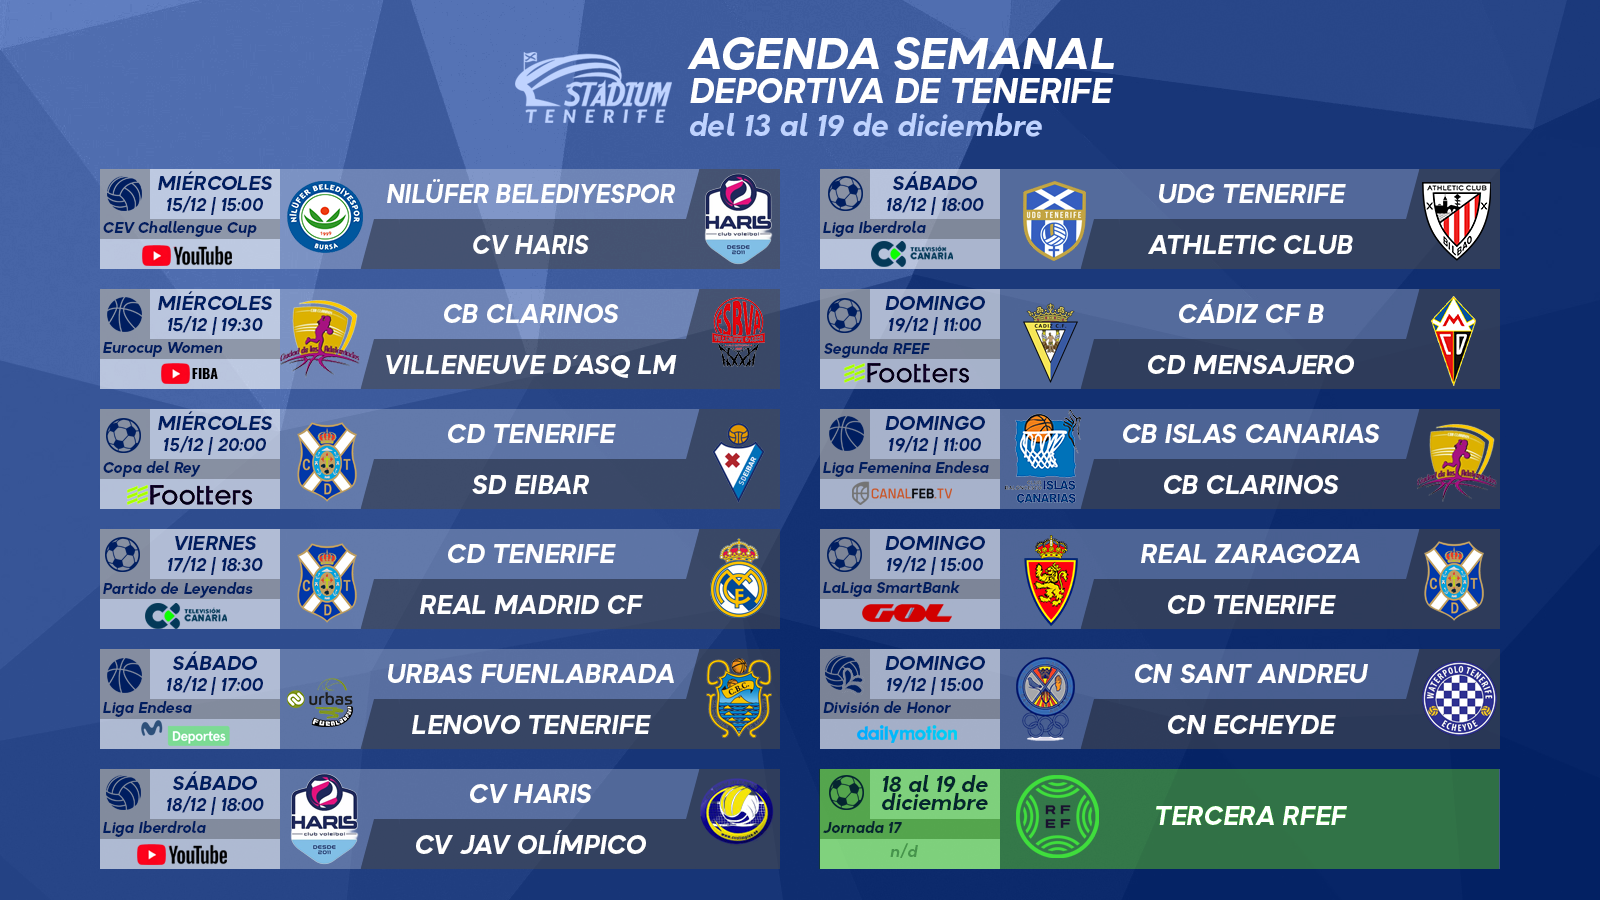 Agenda Semanal Deportiva de Tenerife (13 al 19 de diciembre)